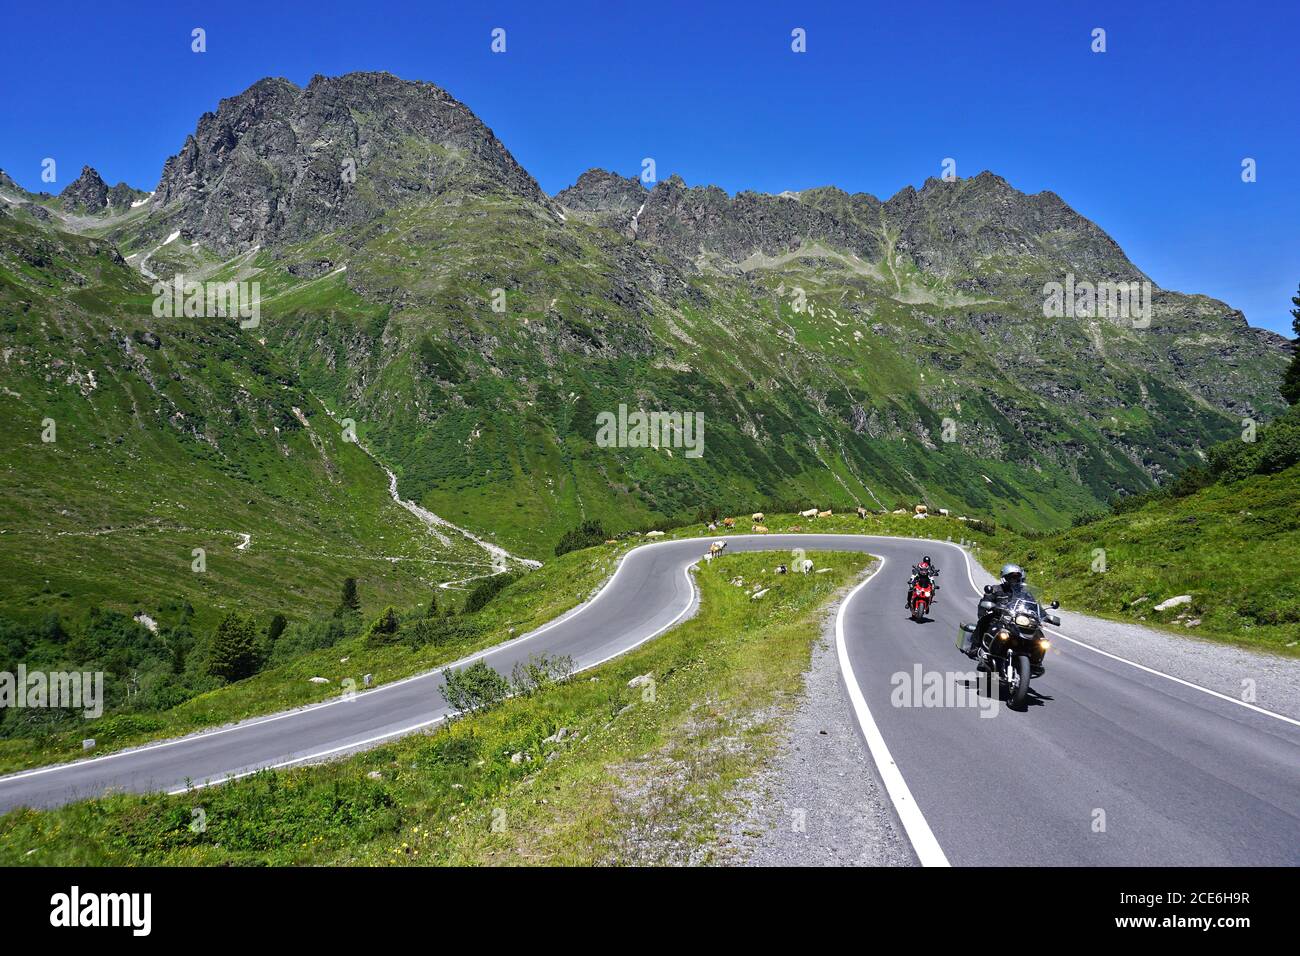 Motocicletas en la carretera alta alpina de Silvretta, Austria, europa Foto de stock